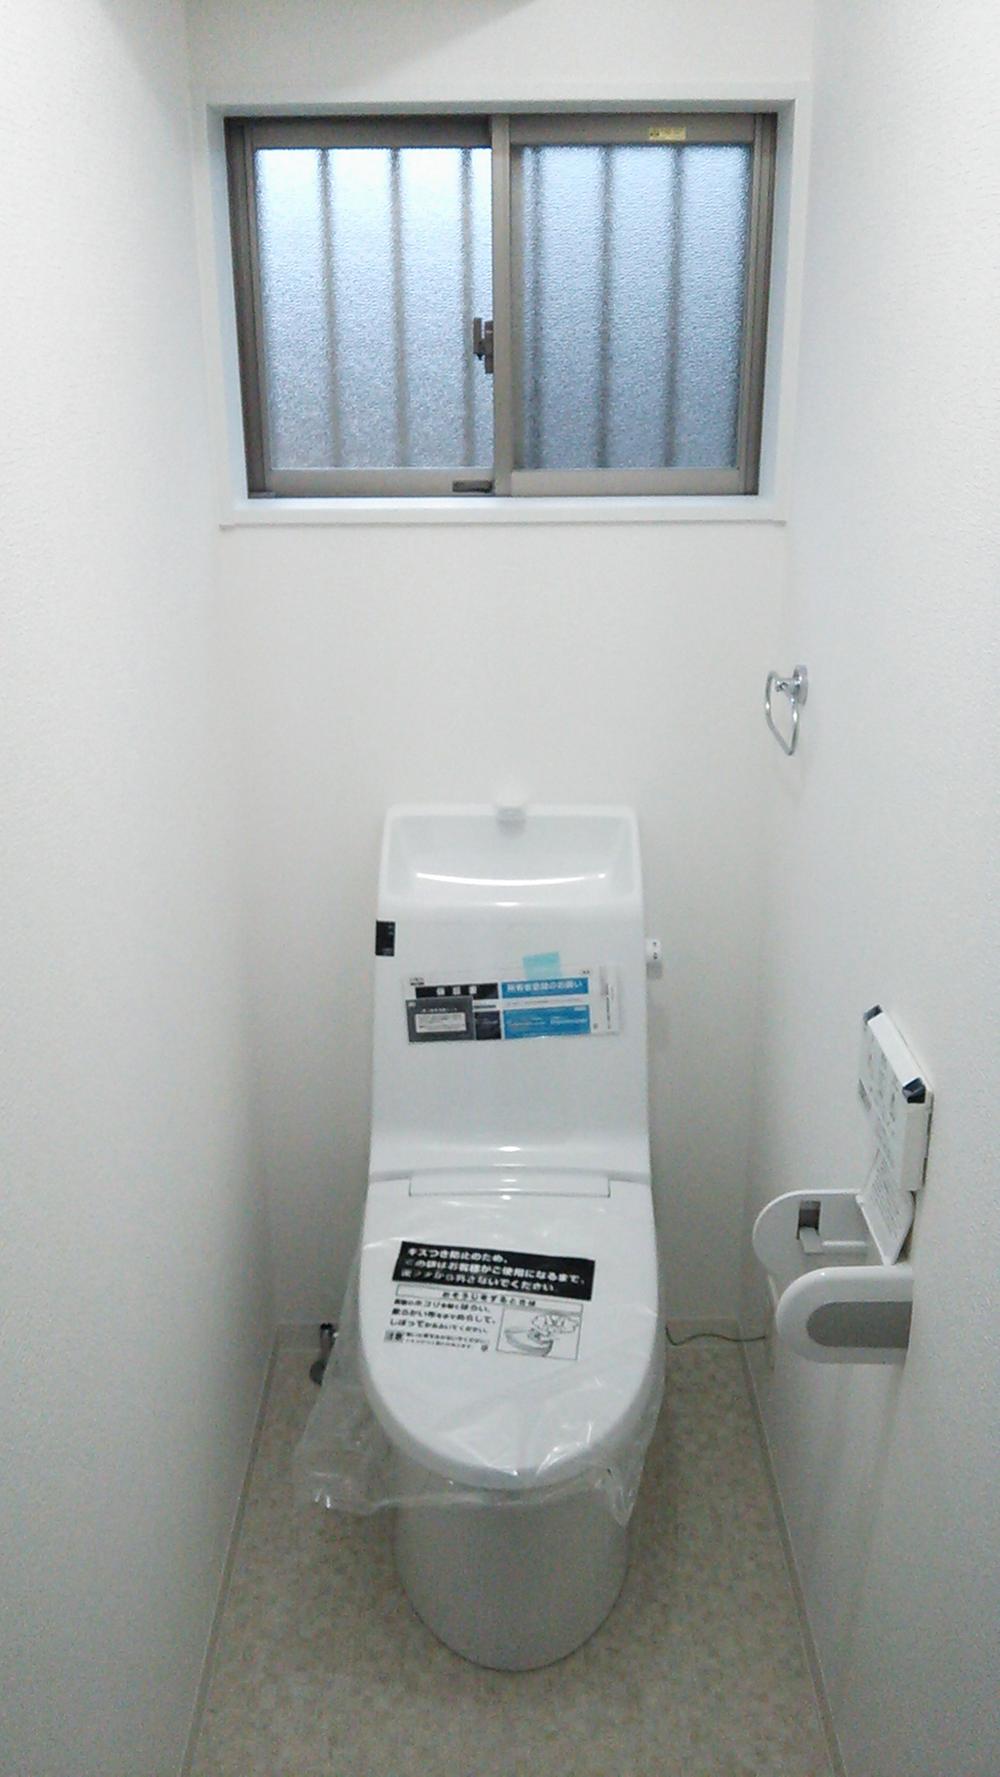 Toilet. Example of construction toilet